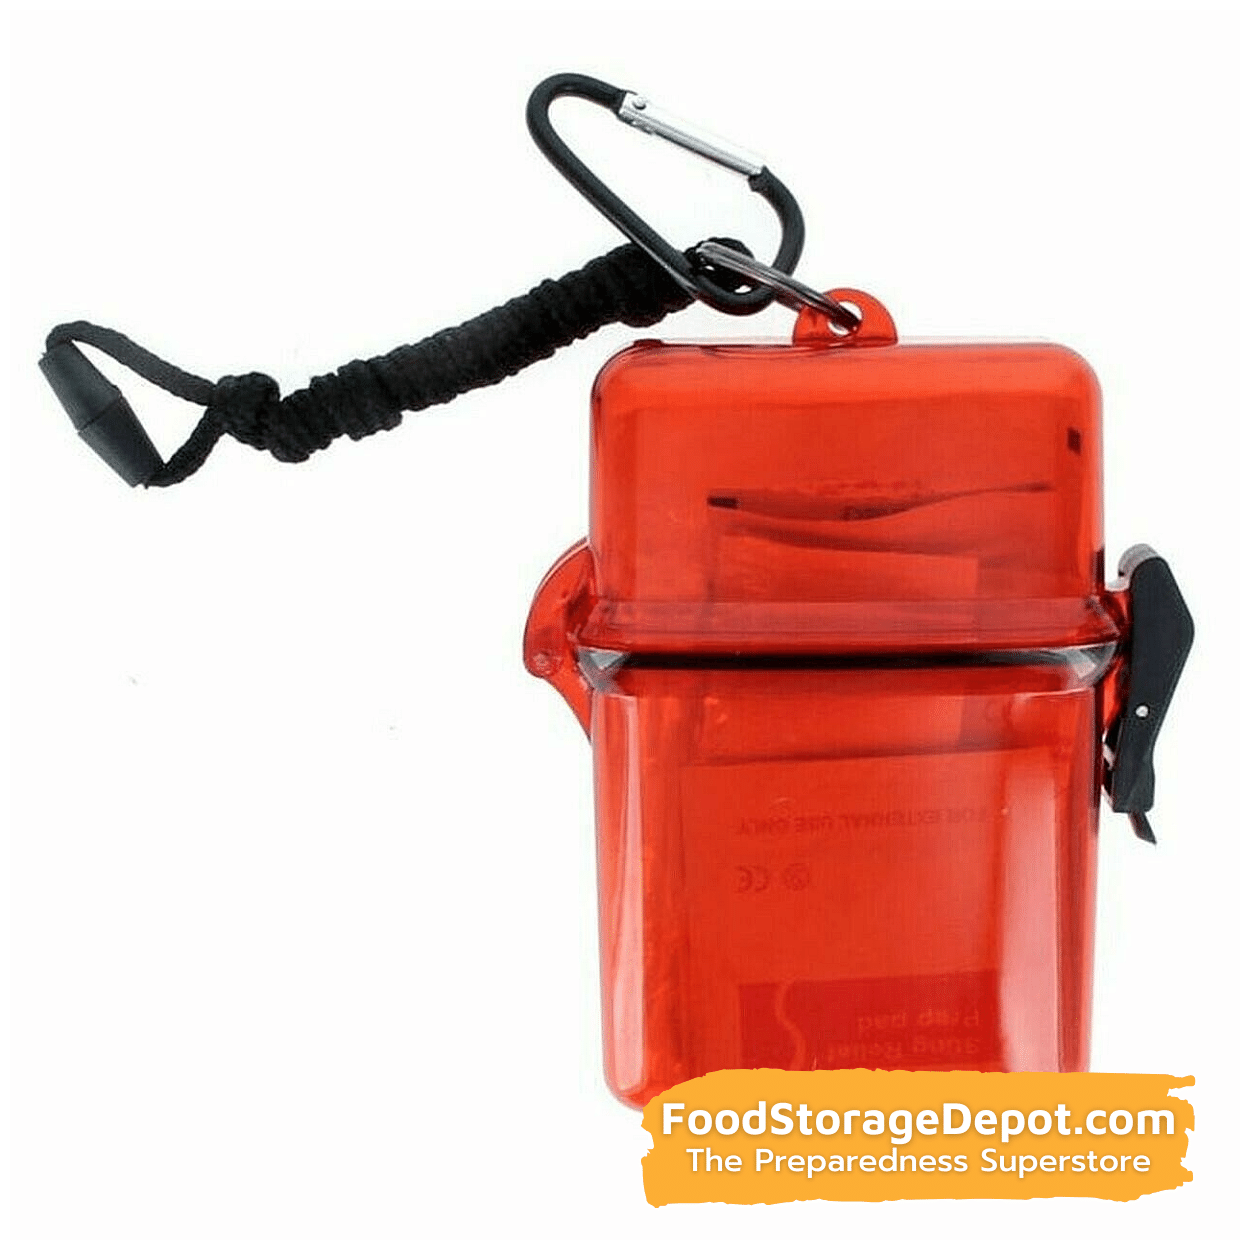 Waterproof First-Aid Kit (50-Piece)